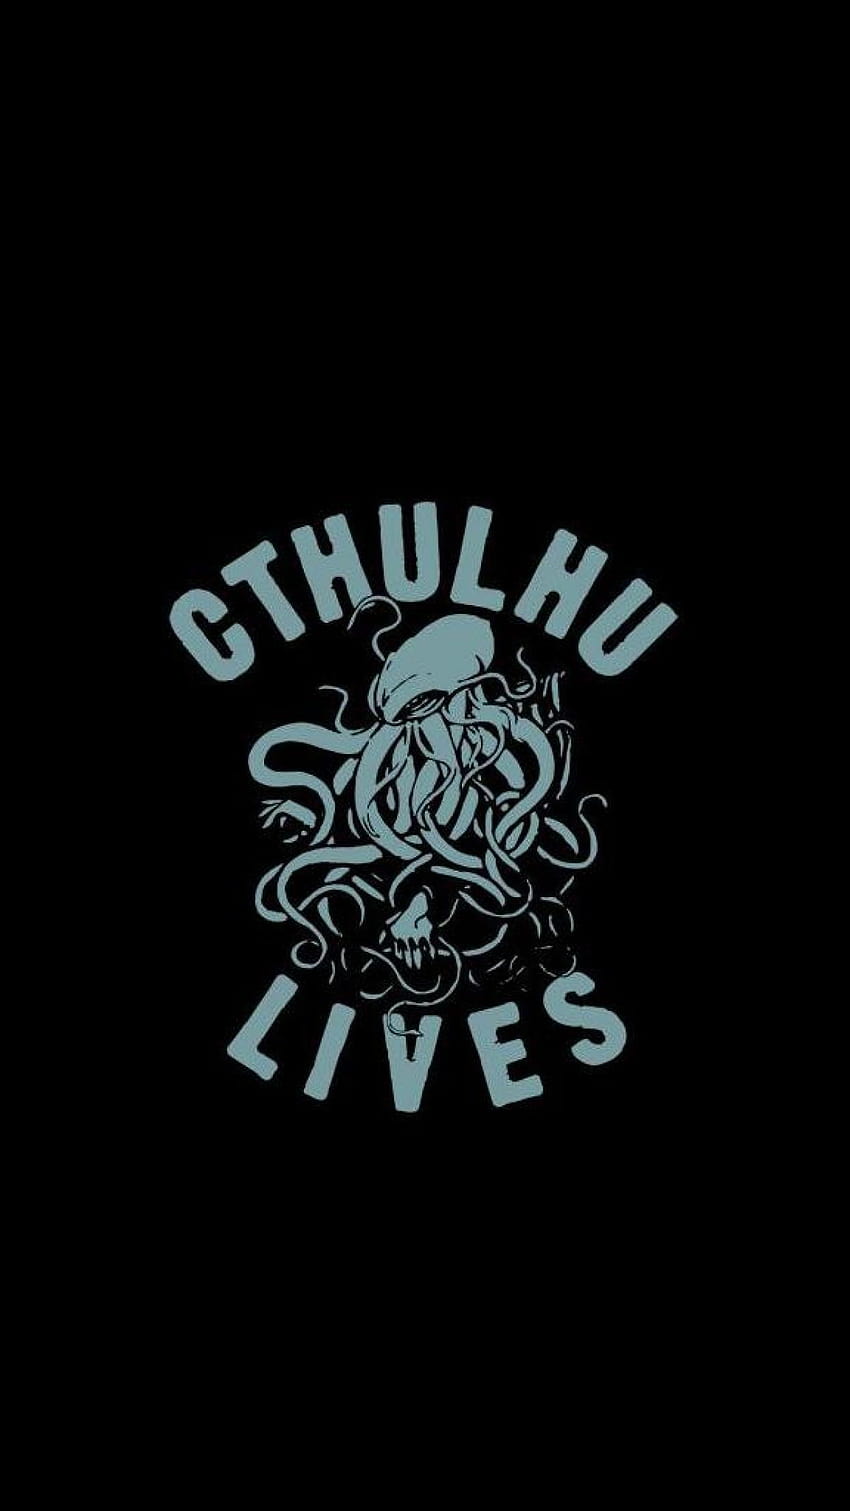 Cthulhu Cthulhu는 작가 h p lovecraft HD 전화 배경 화면